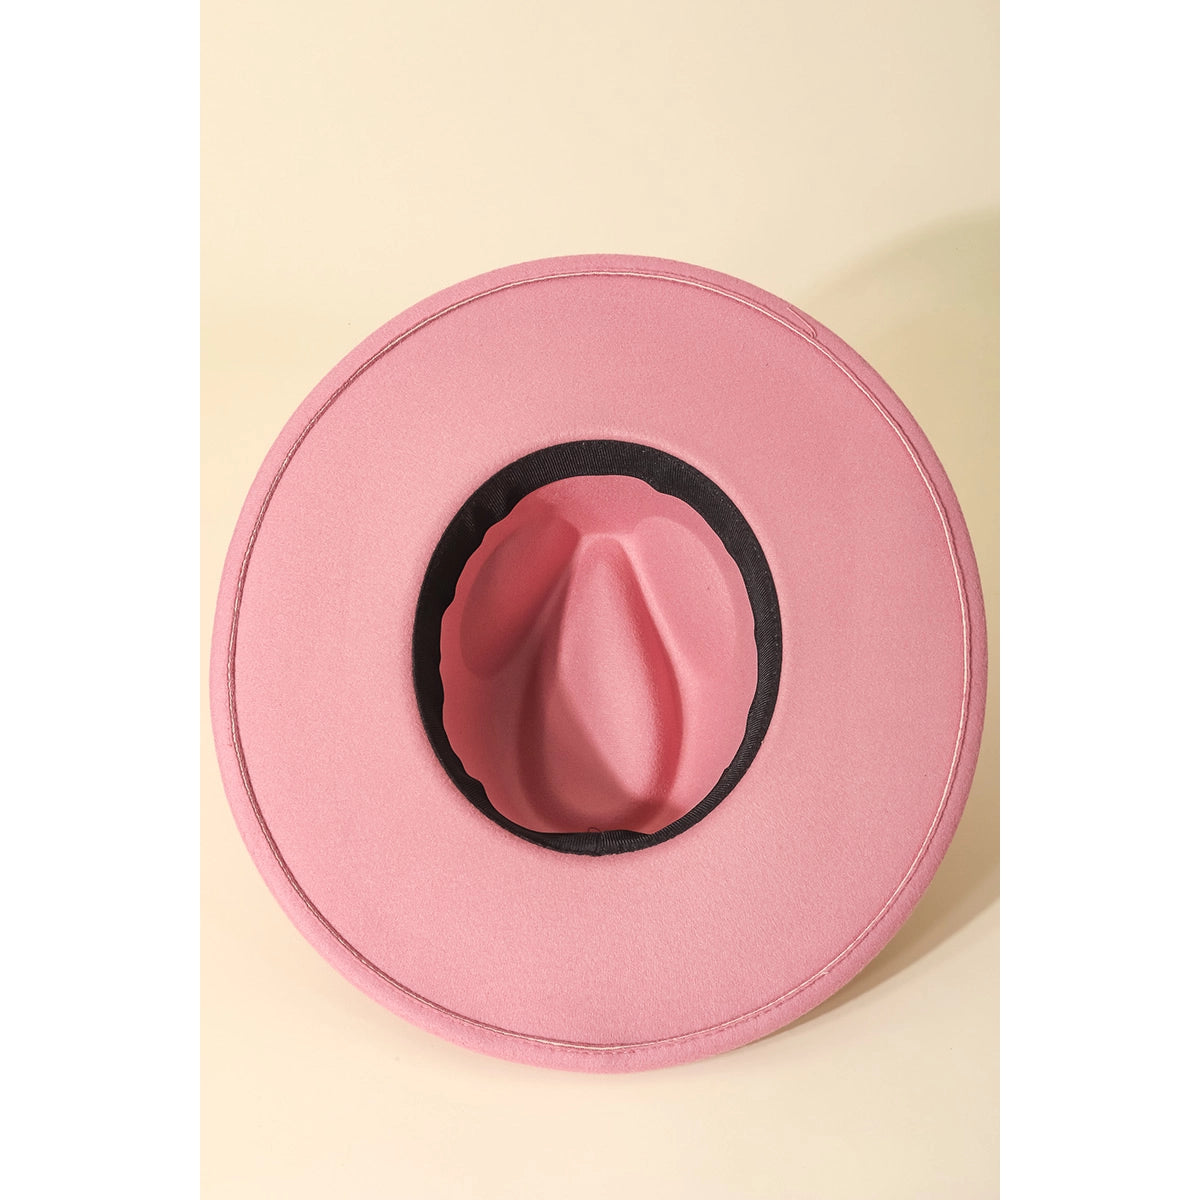 Celeste Ribbon Fedora Hat - Pink